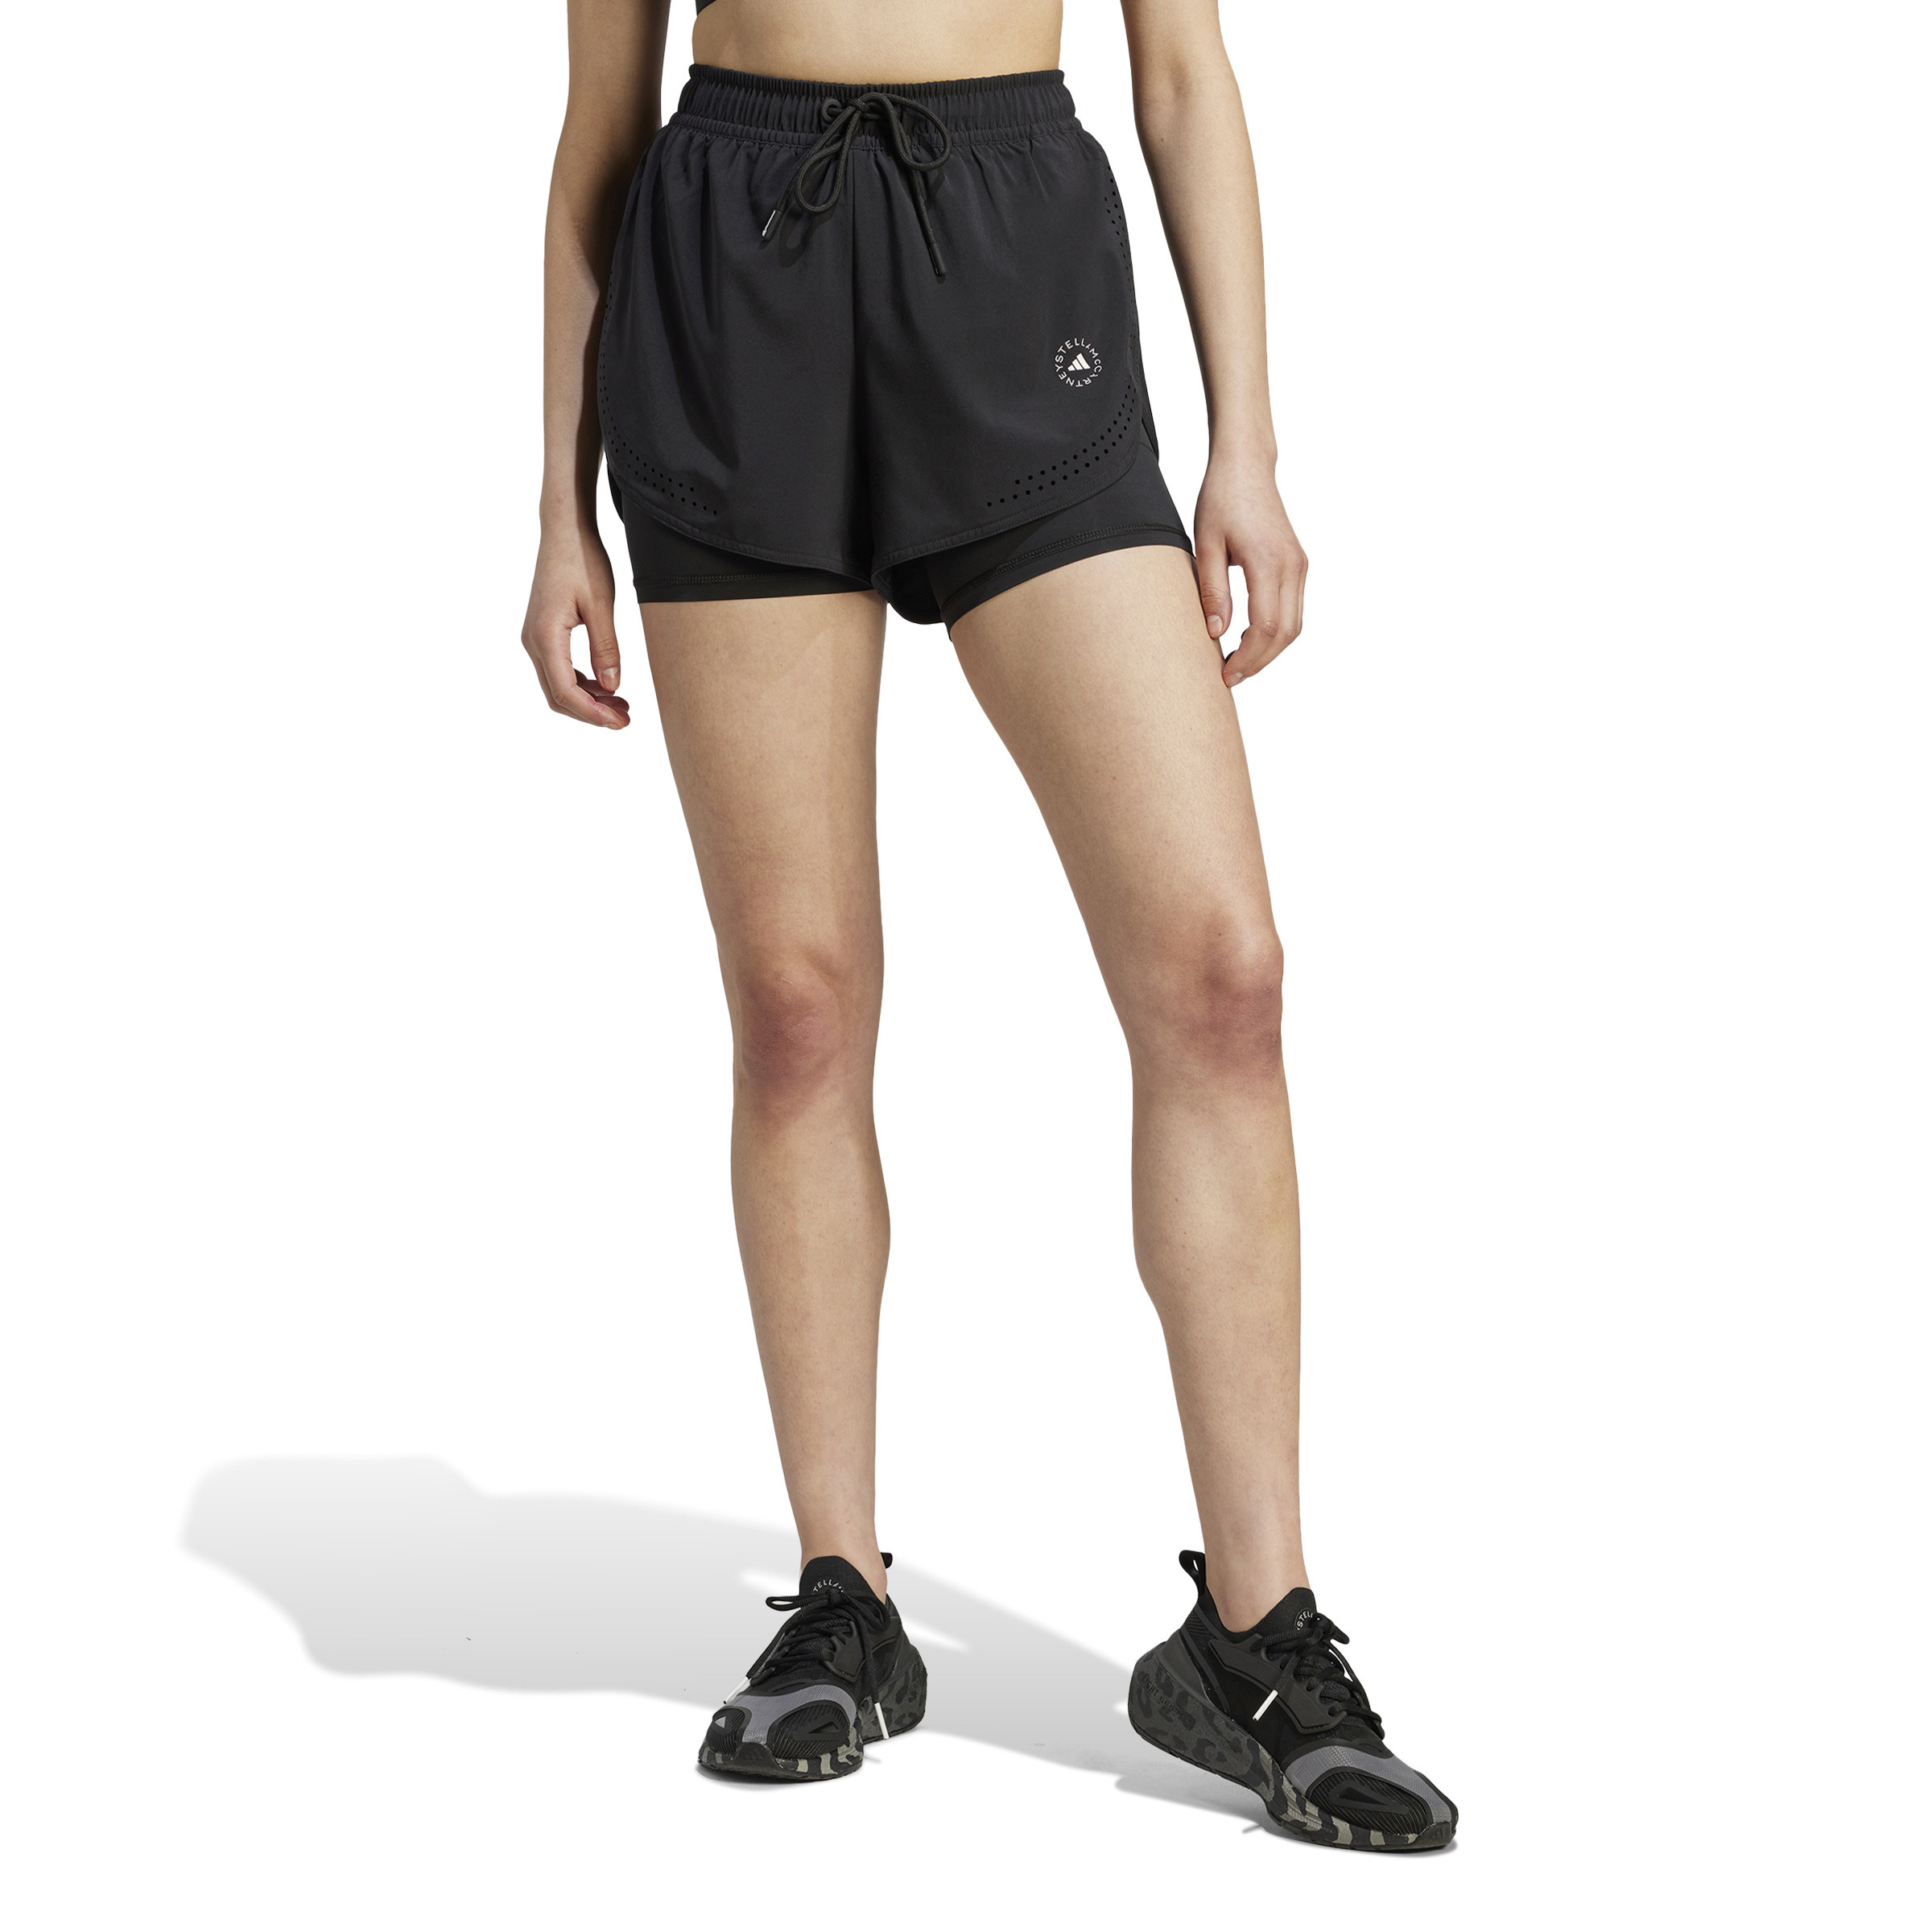 Adidas by Stella McCartney - TruePurpose 2-in-1 Training Shorts, Black, large image number 6